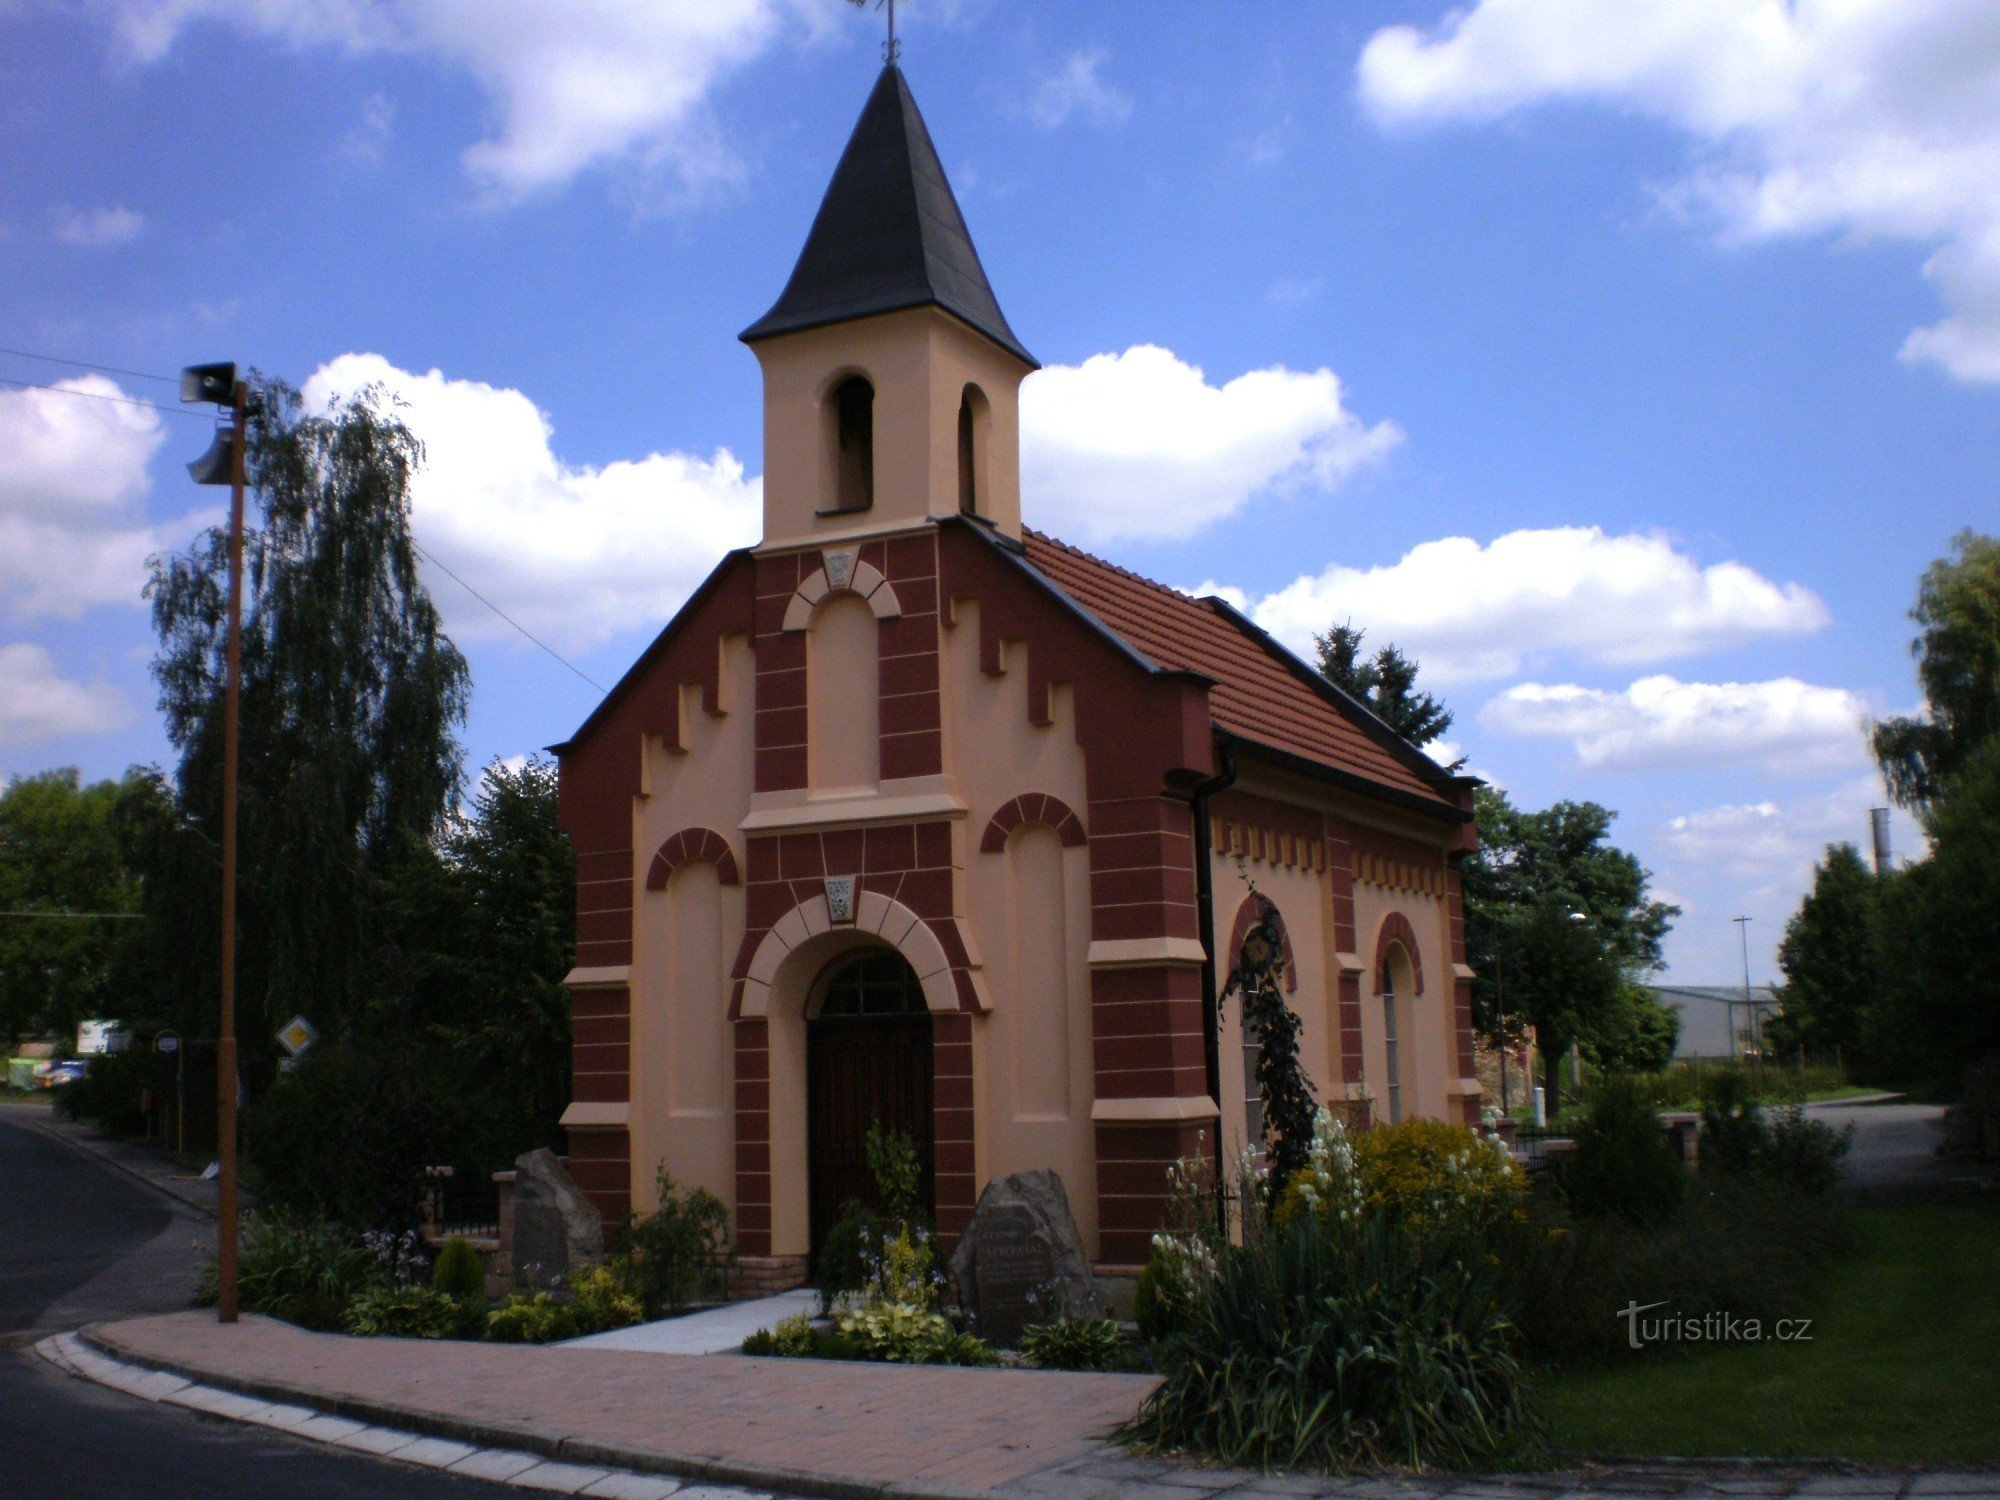 Chapel in Jedousov